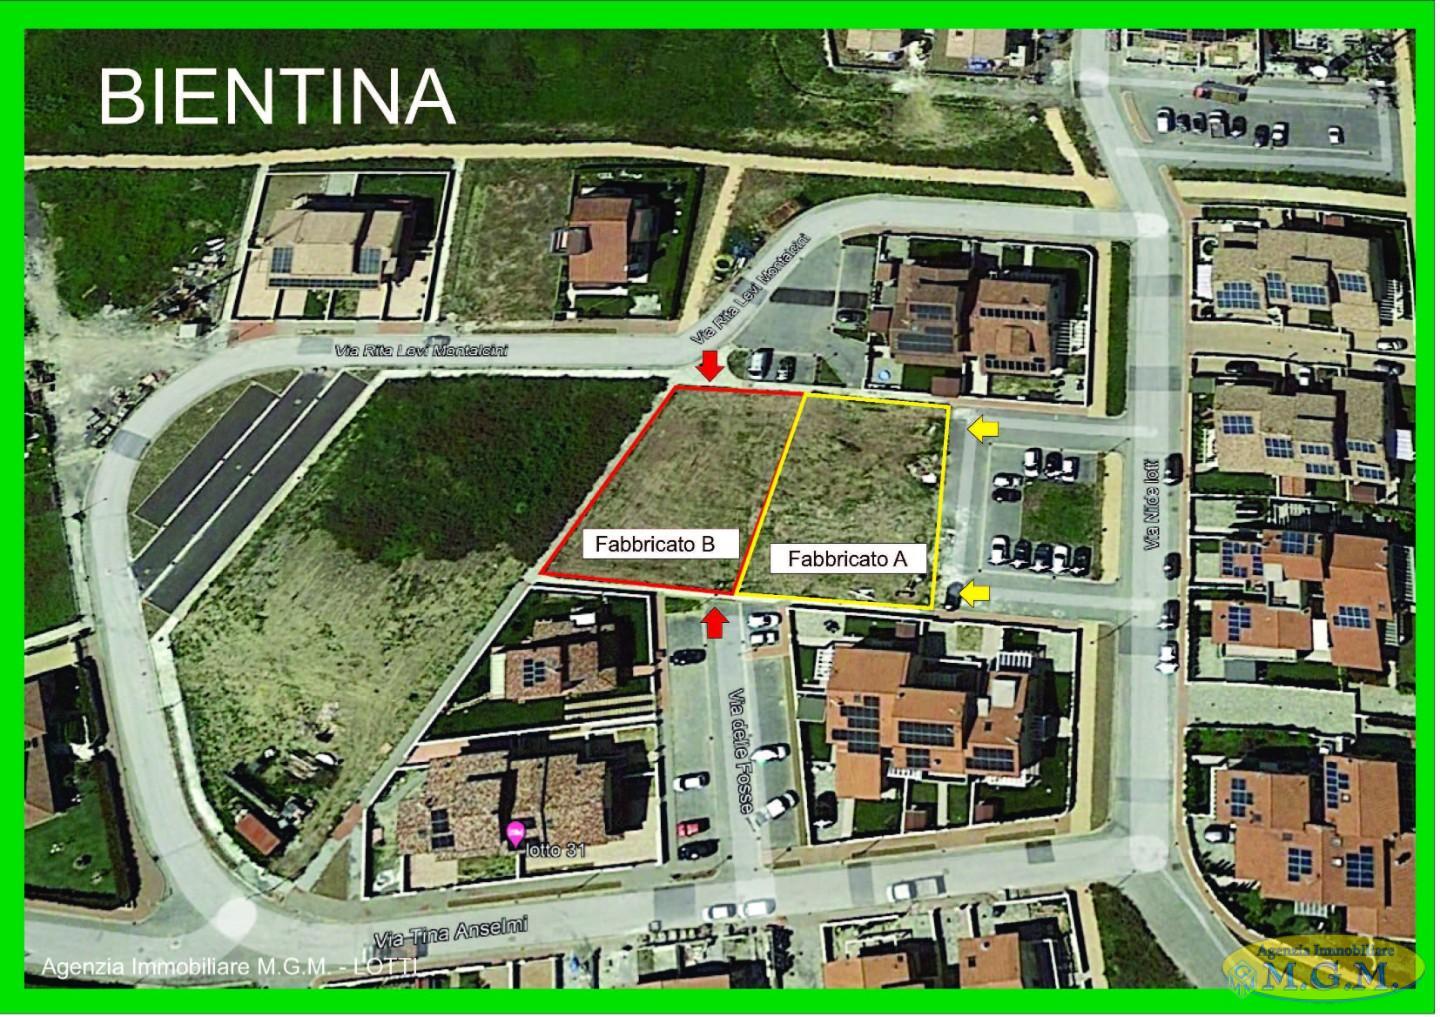 Mgmnet.it: Villetta a schiera angolare in vendita a Bientina